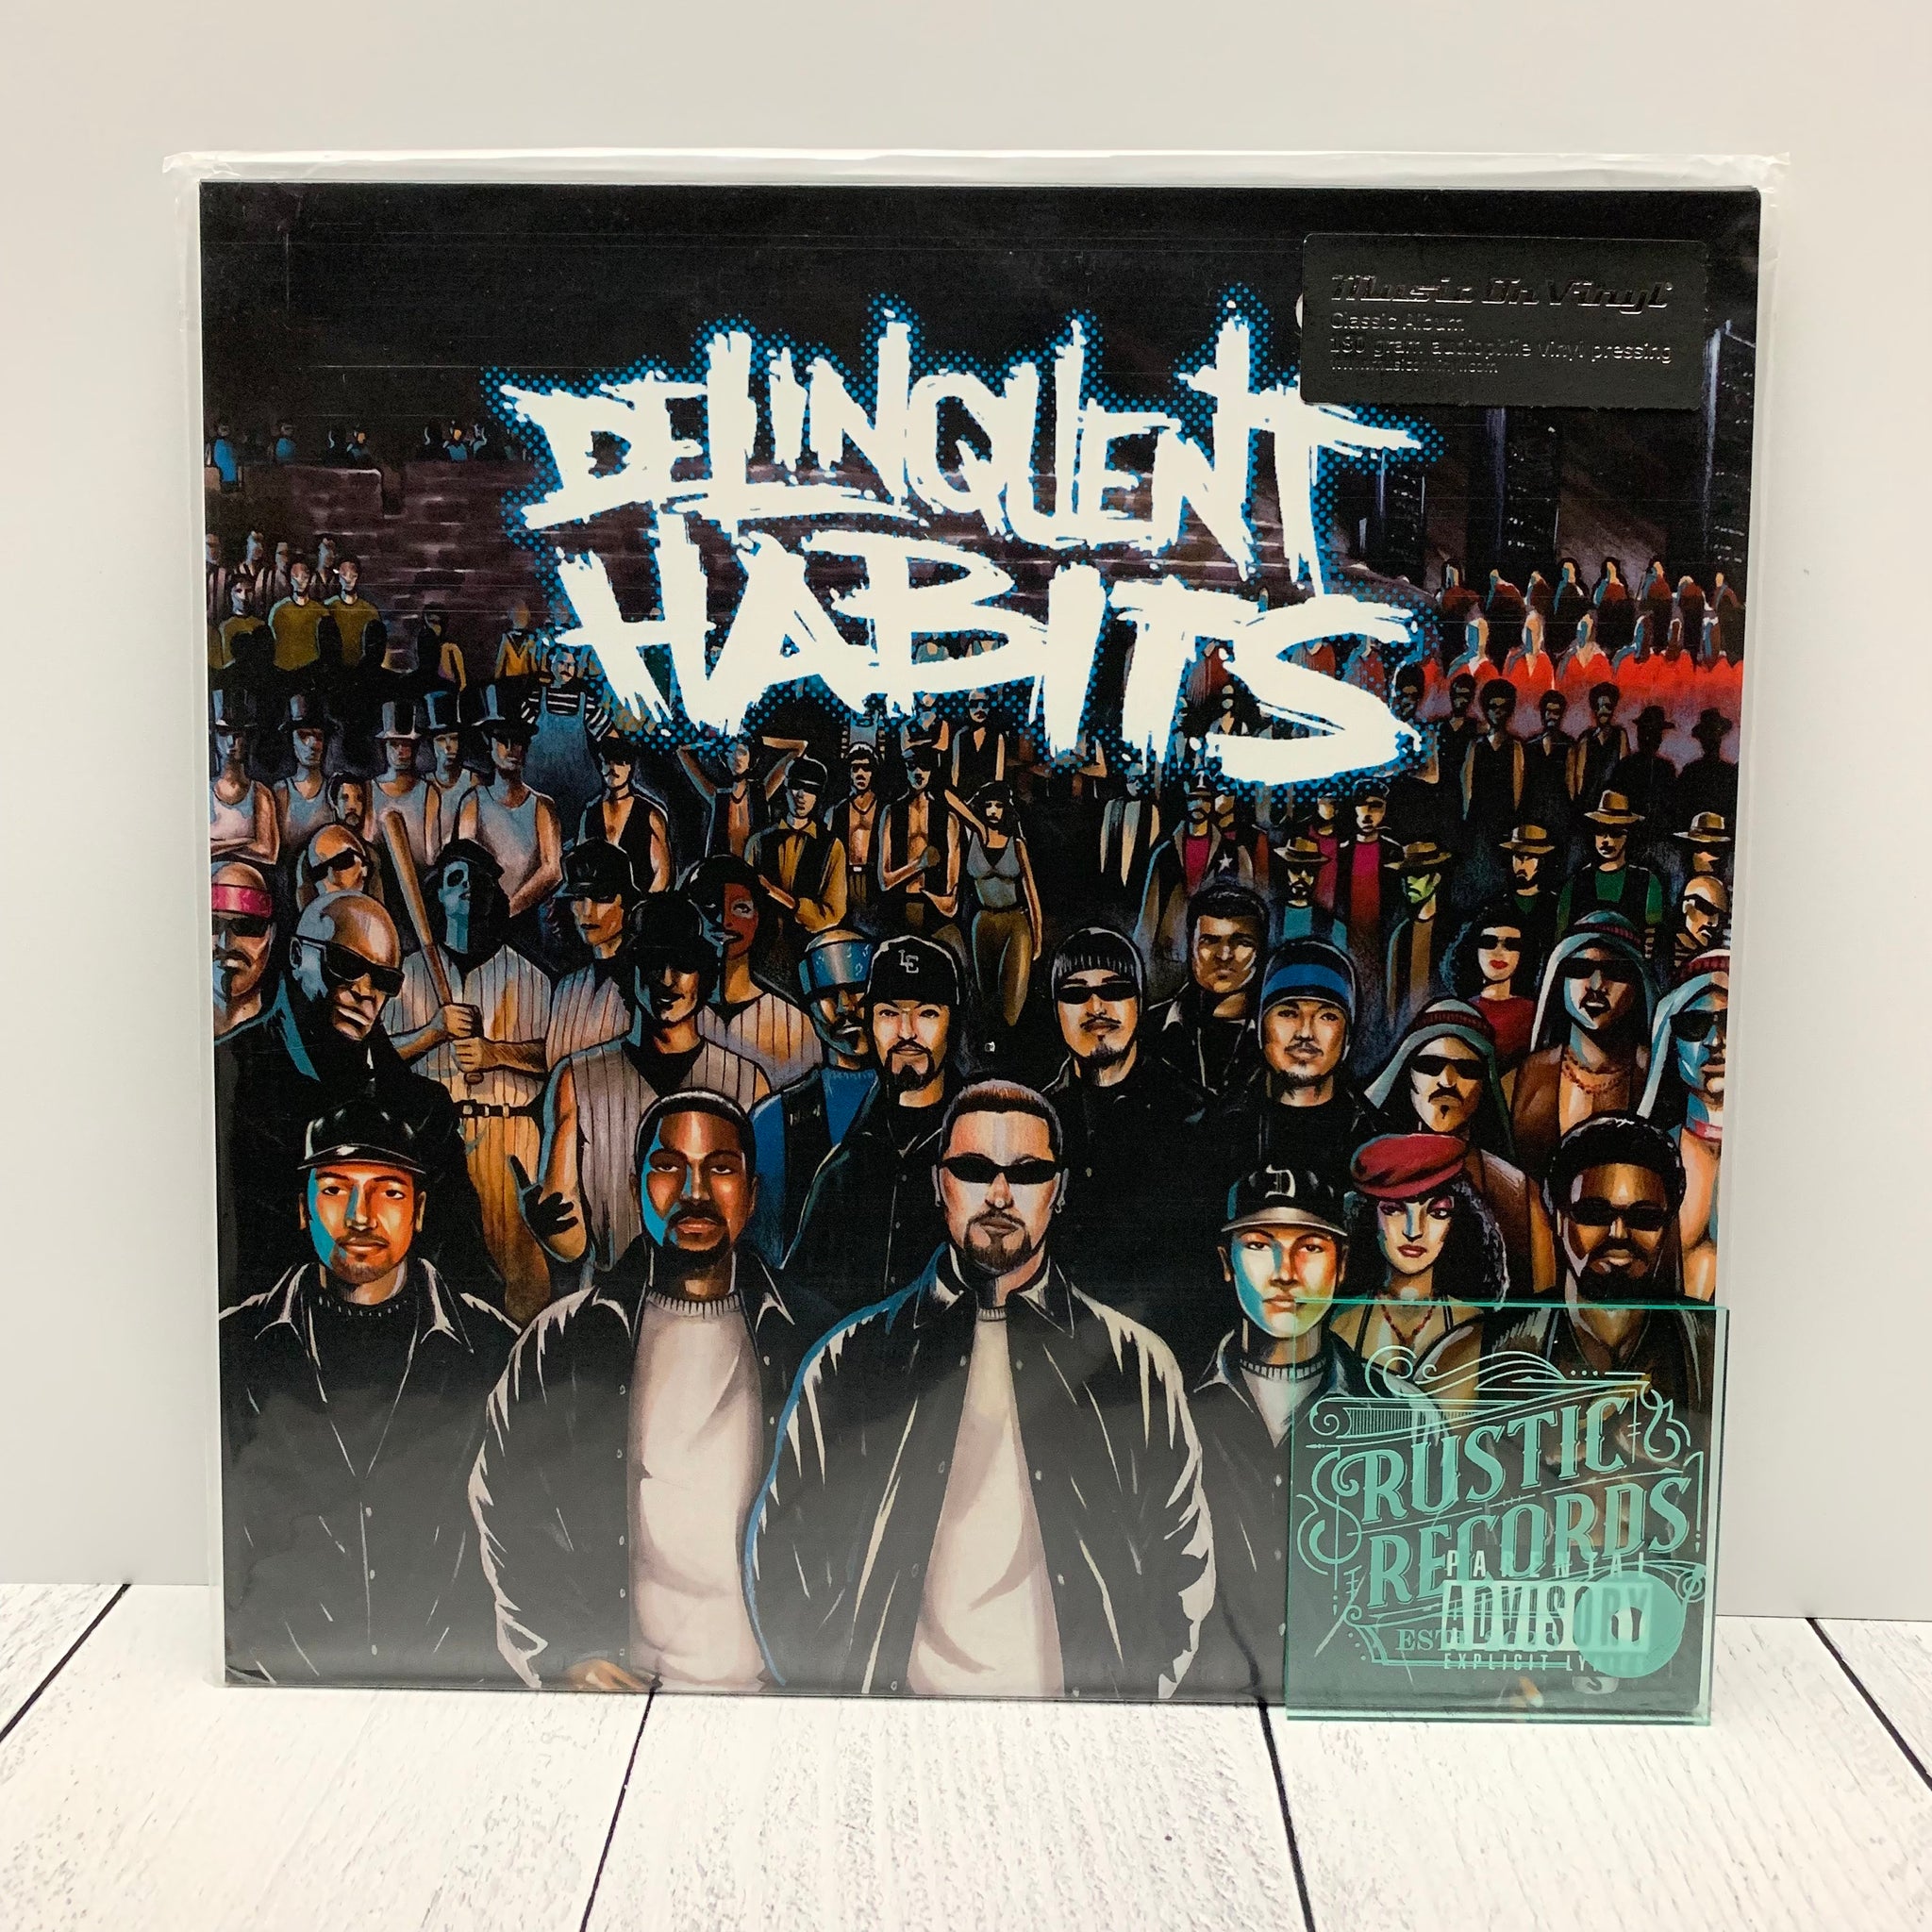 Delinquent Habits - Delinquent Habits (Music On Vinyl)